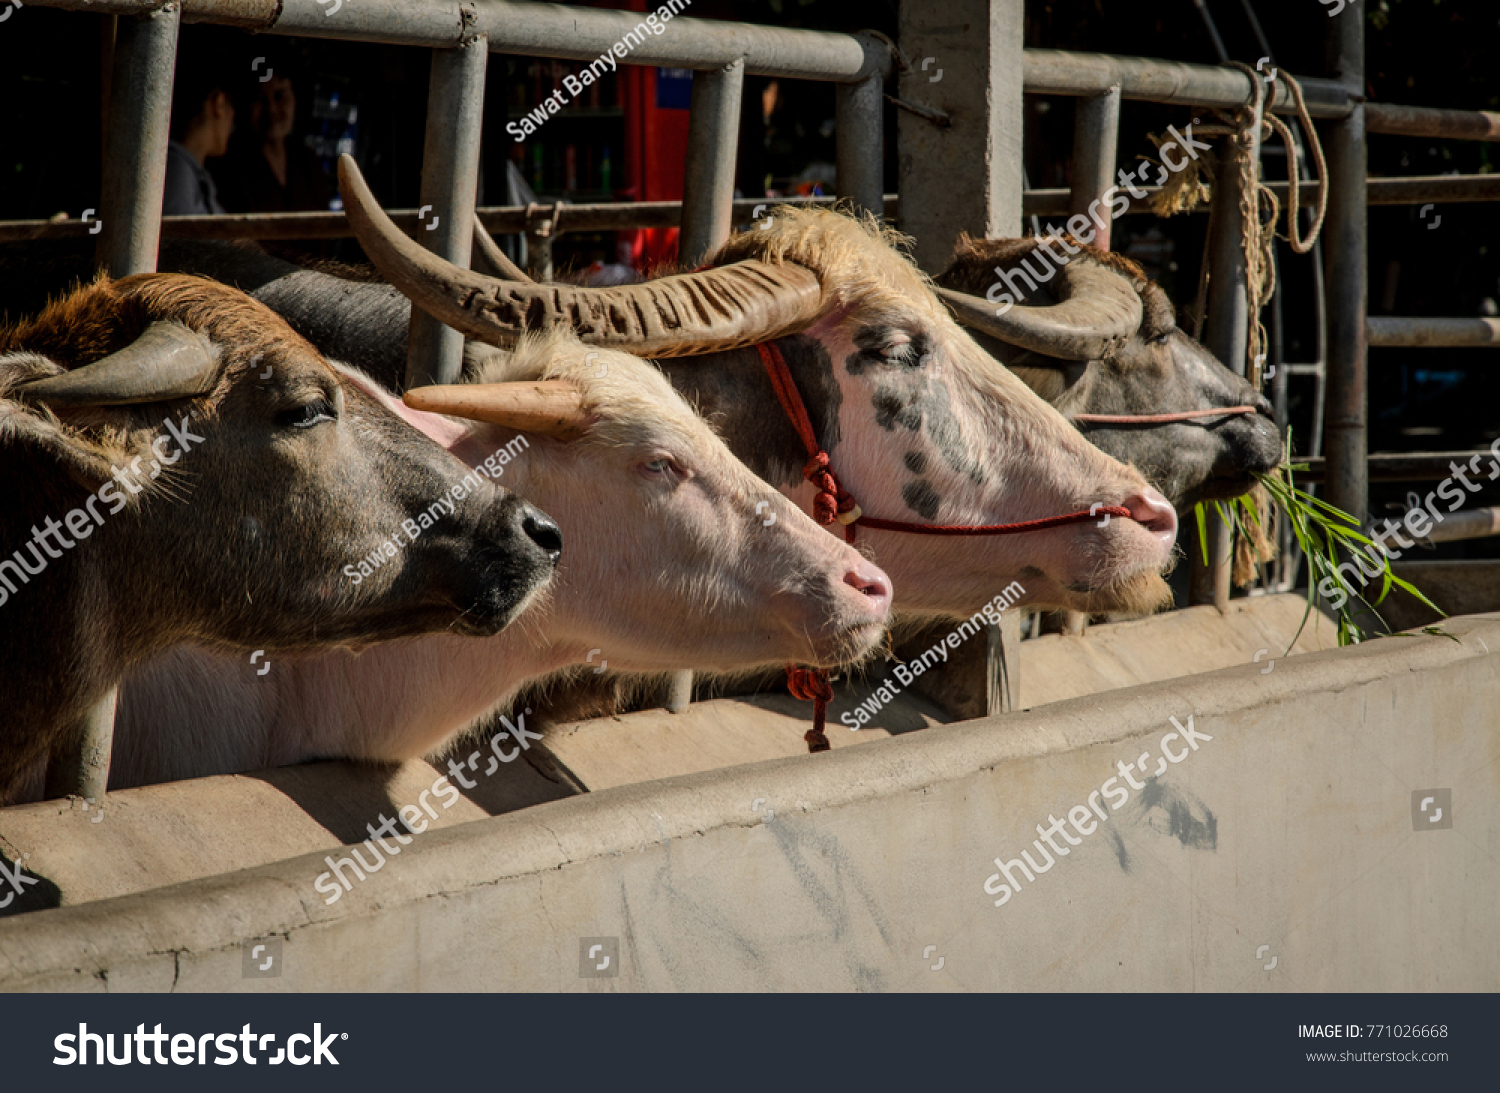 Buffalo in a livestock stall #771026668